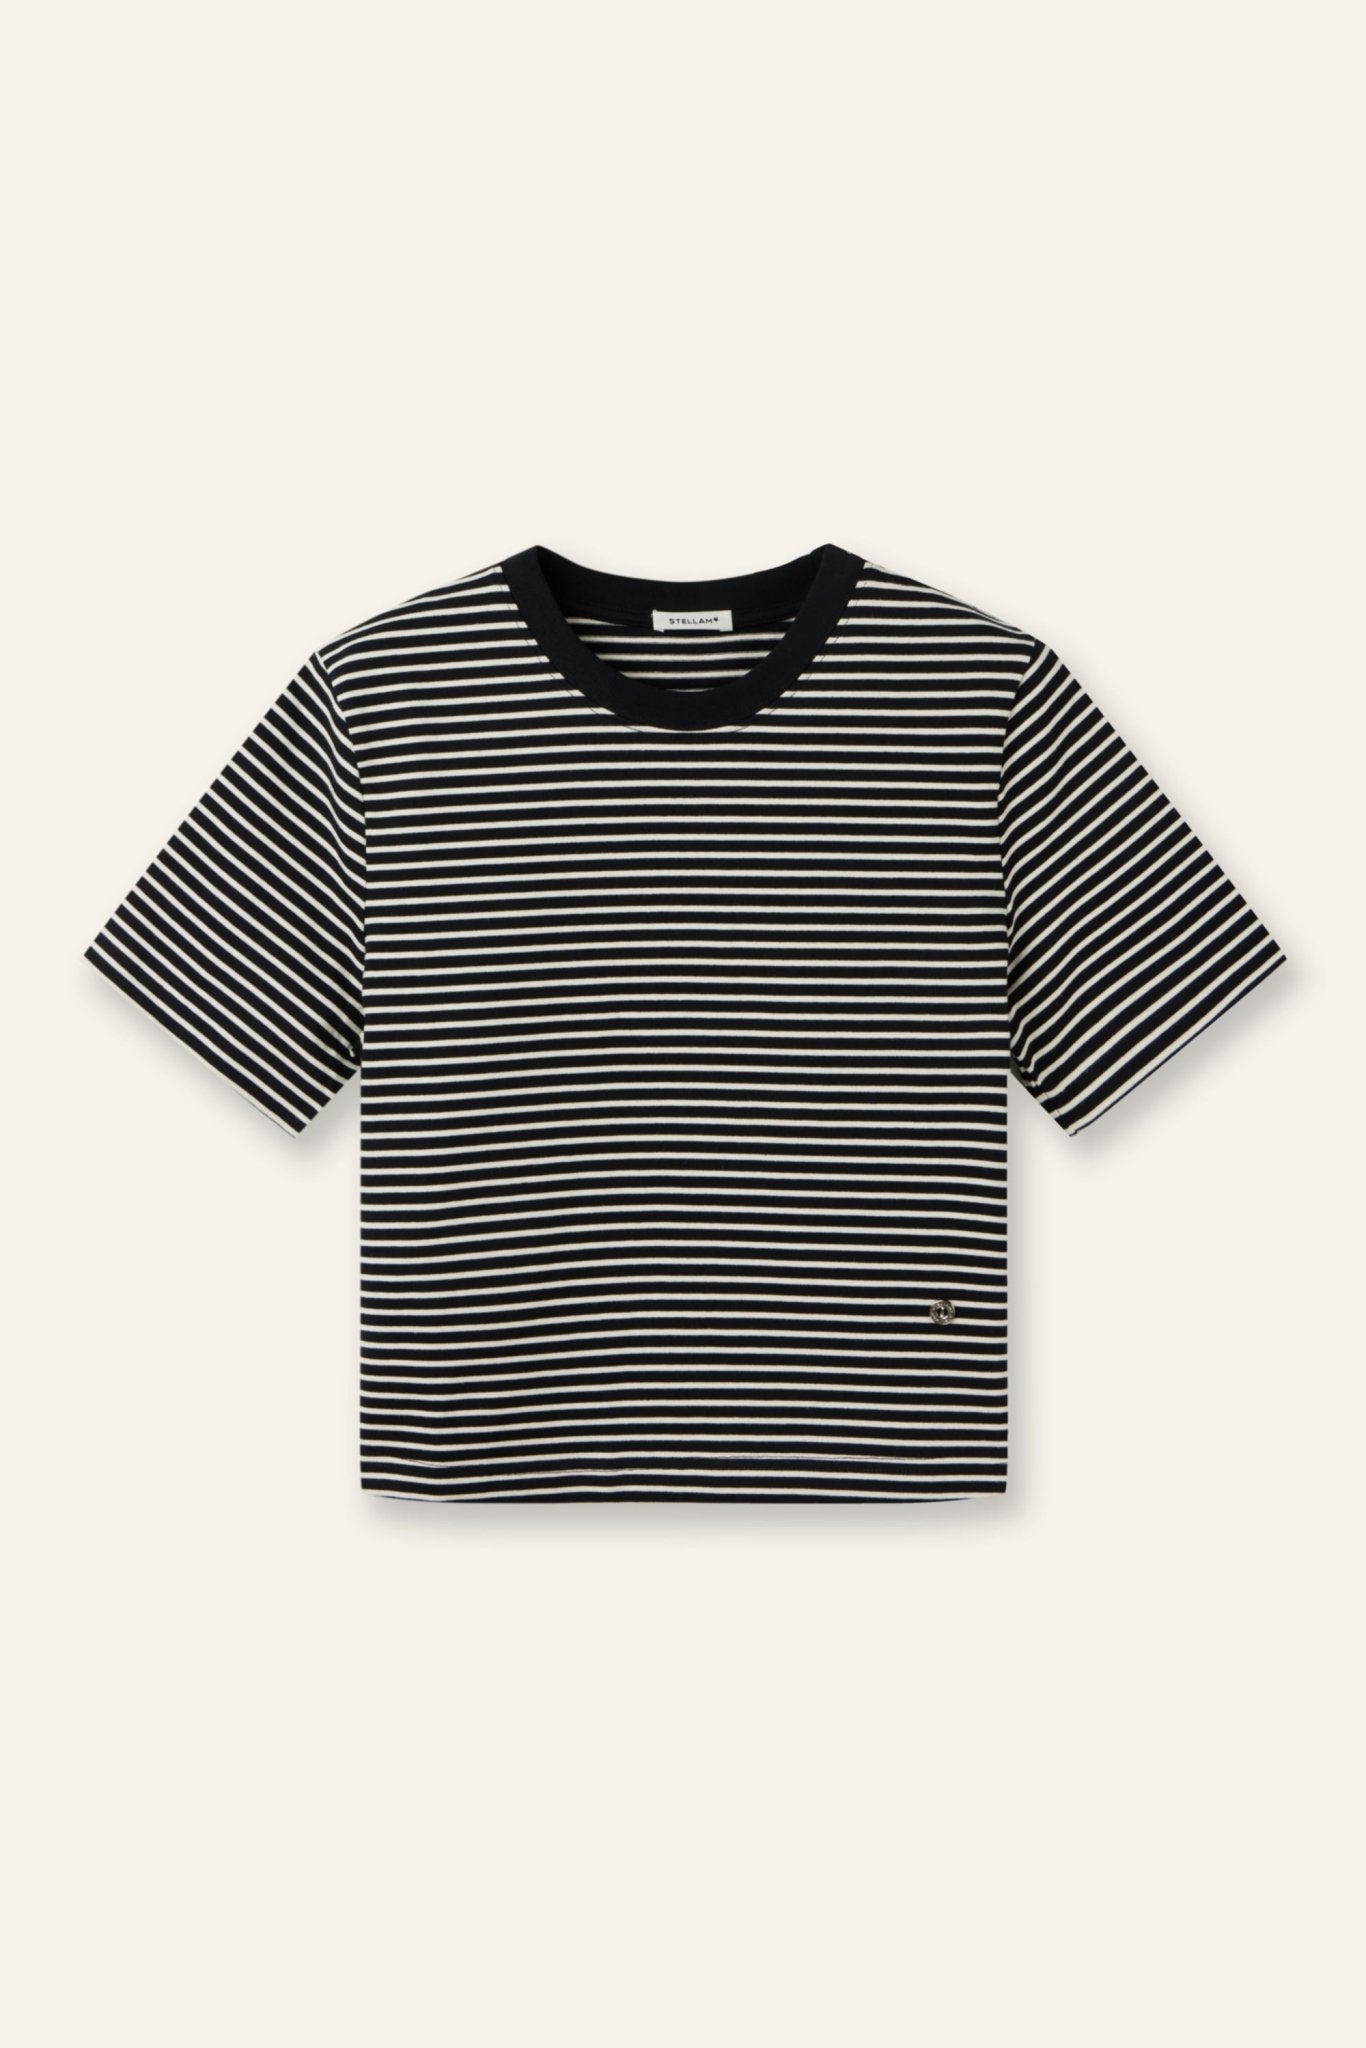 LUCI cotton stripe top (Black stripe) - STELLAM